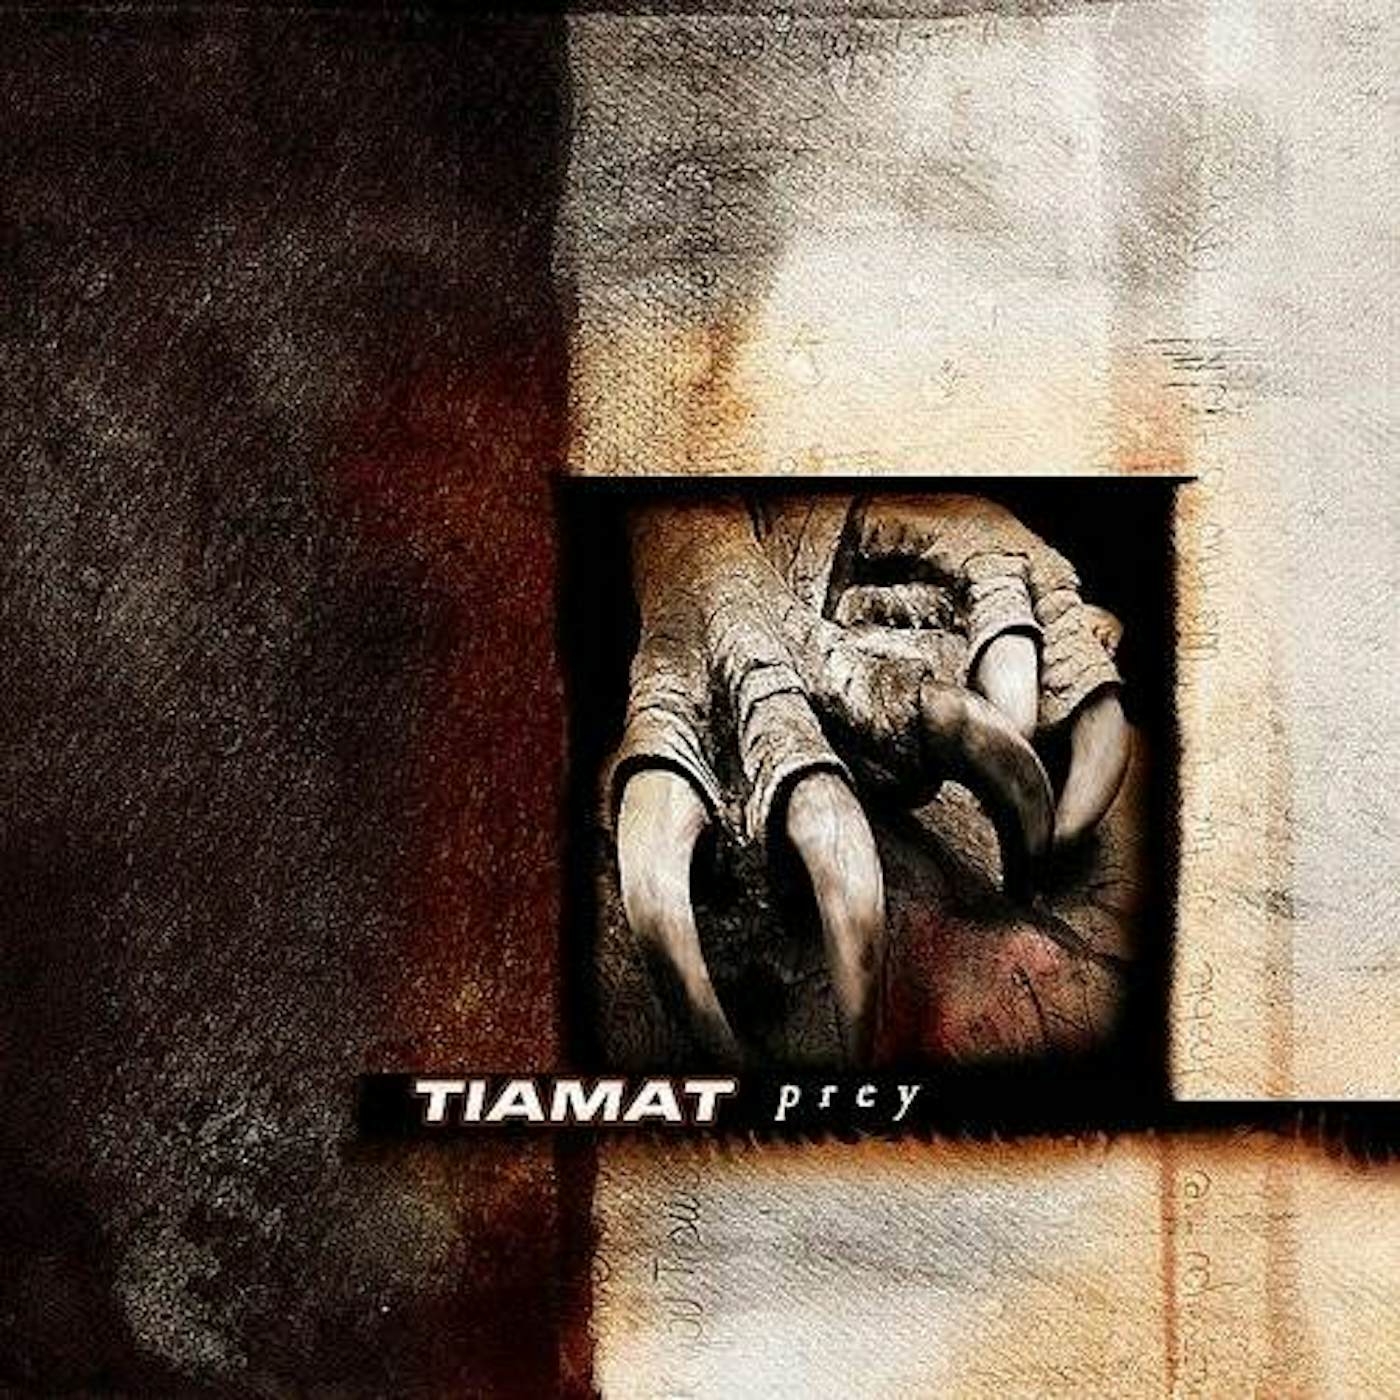 Tiamat Prey (gold vinyl) vinyl record